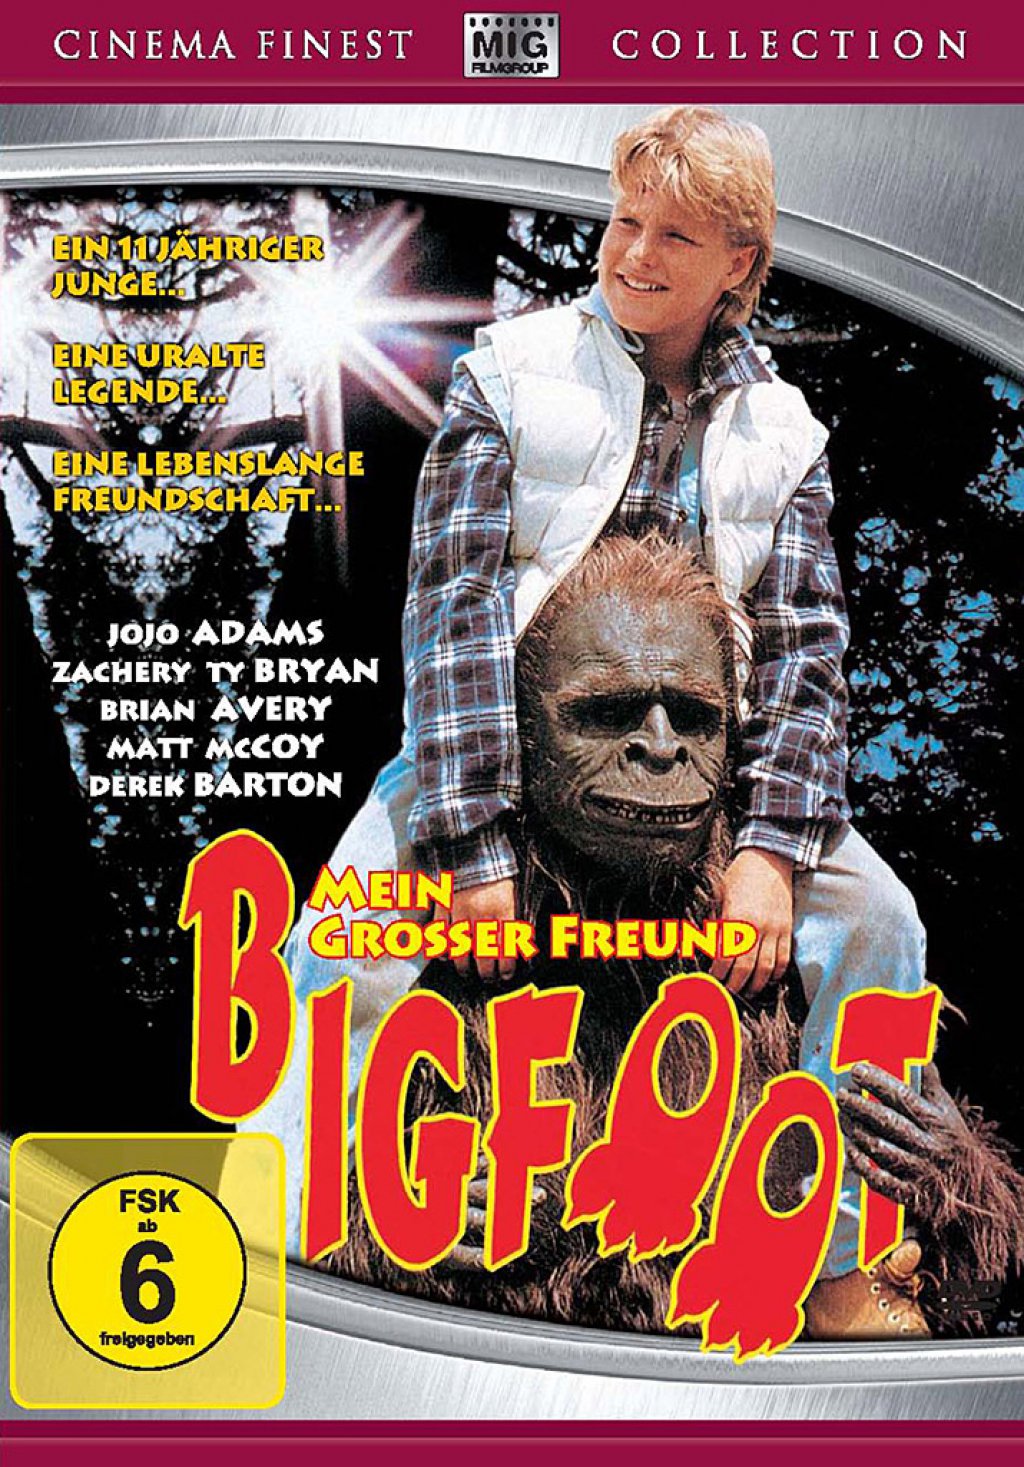 Bigfoot: The Unforgettable Encounter (1995) Screenshot 4 